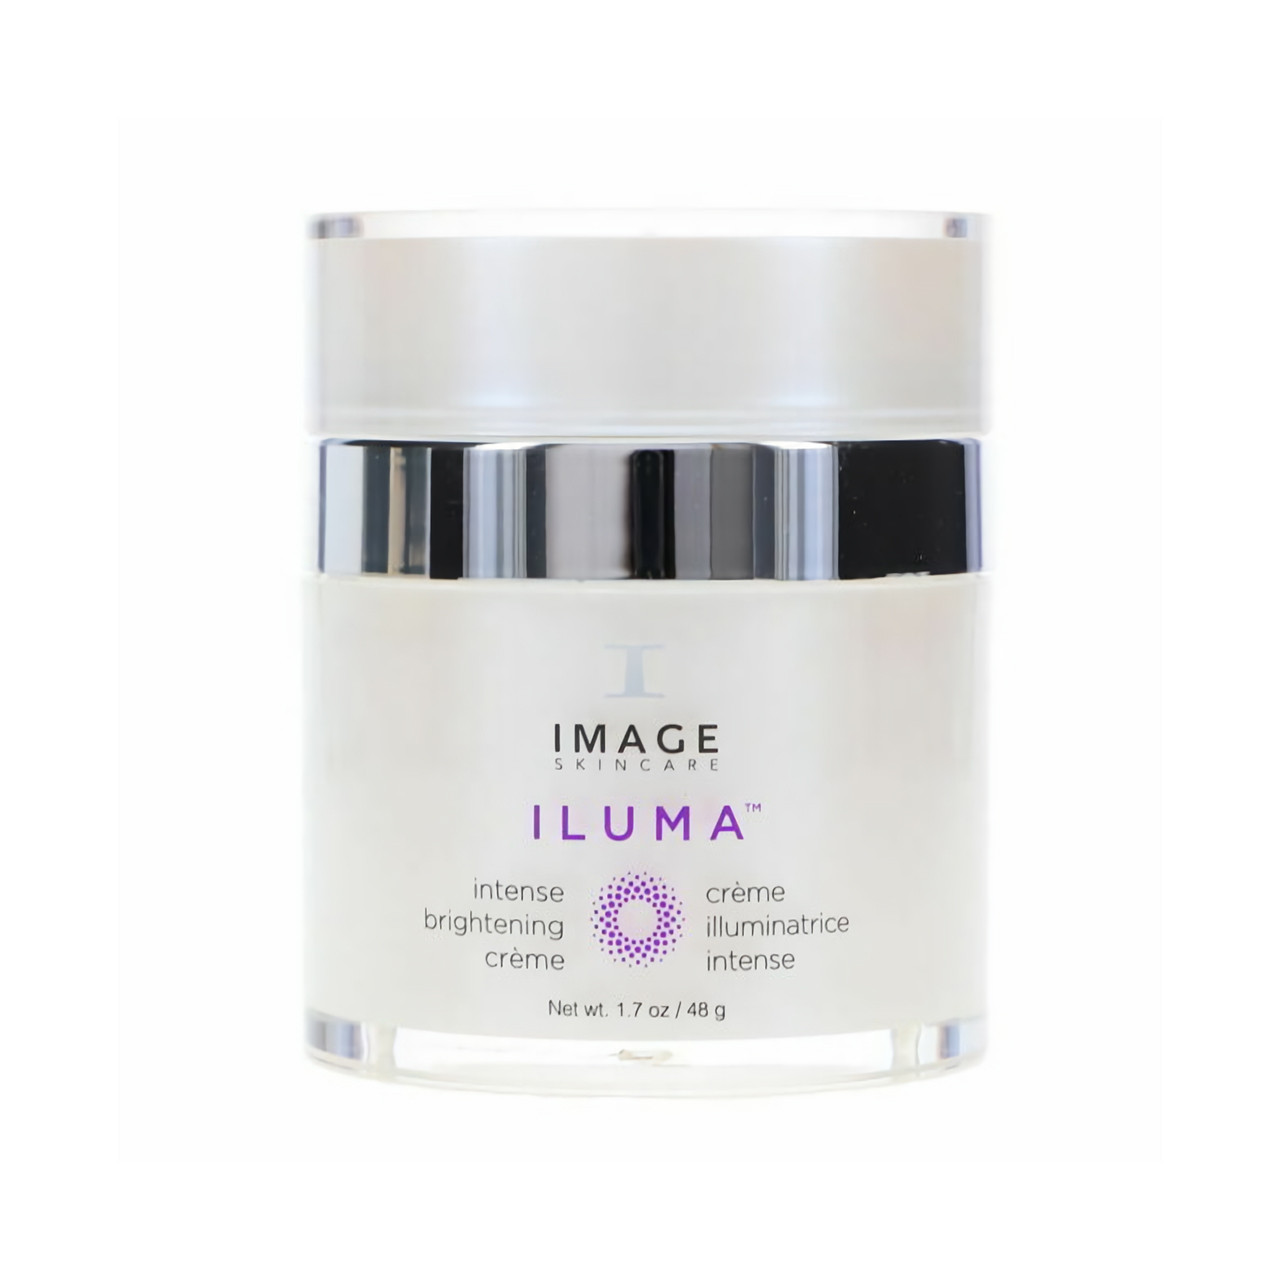 Image Skincare Iluma Intense Brightening Creme - 1.7 oz (IL-104N) (IM01159)